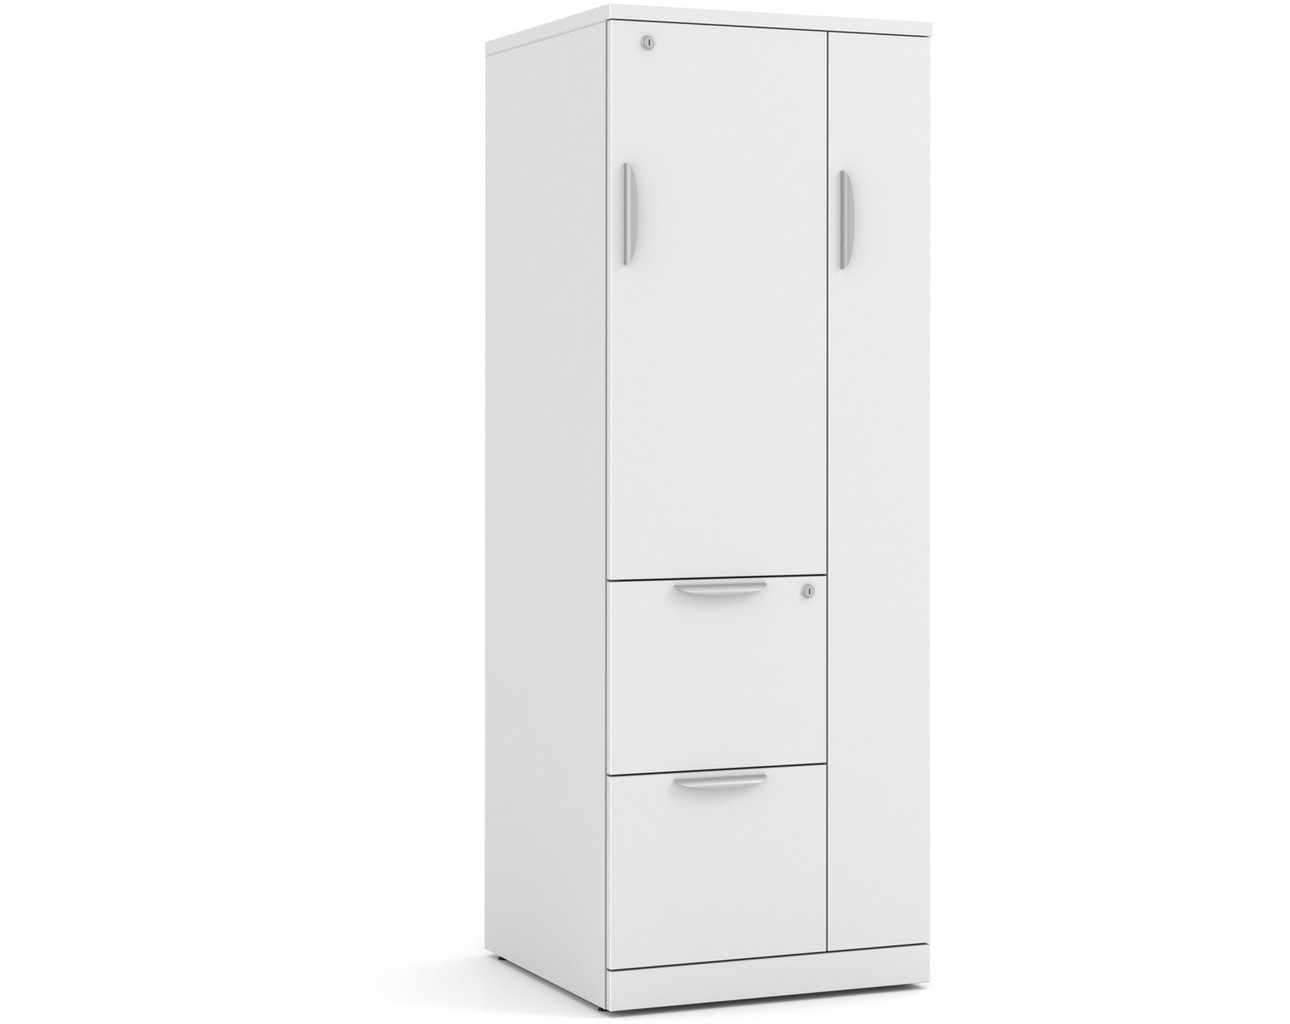 Locking Locker Wardrobe Storage Unit with White Finishtorage Unit – White